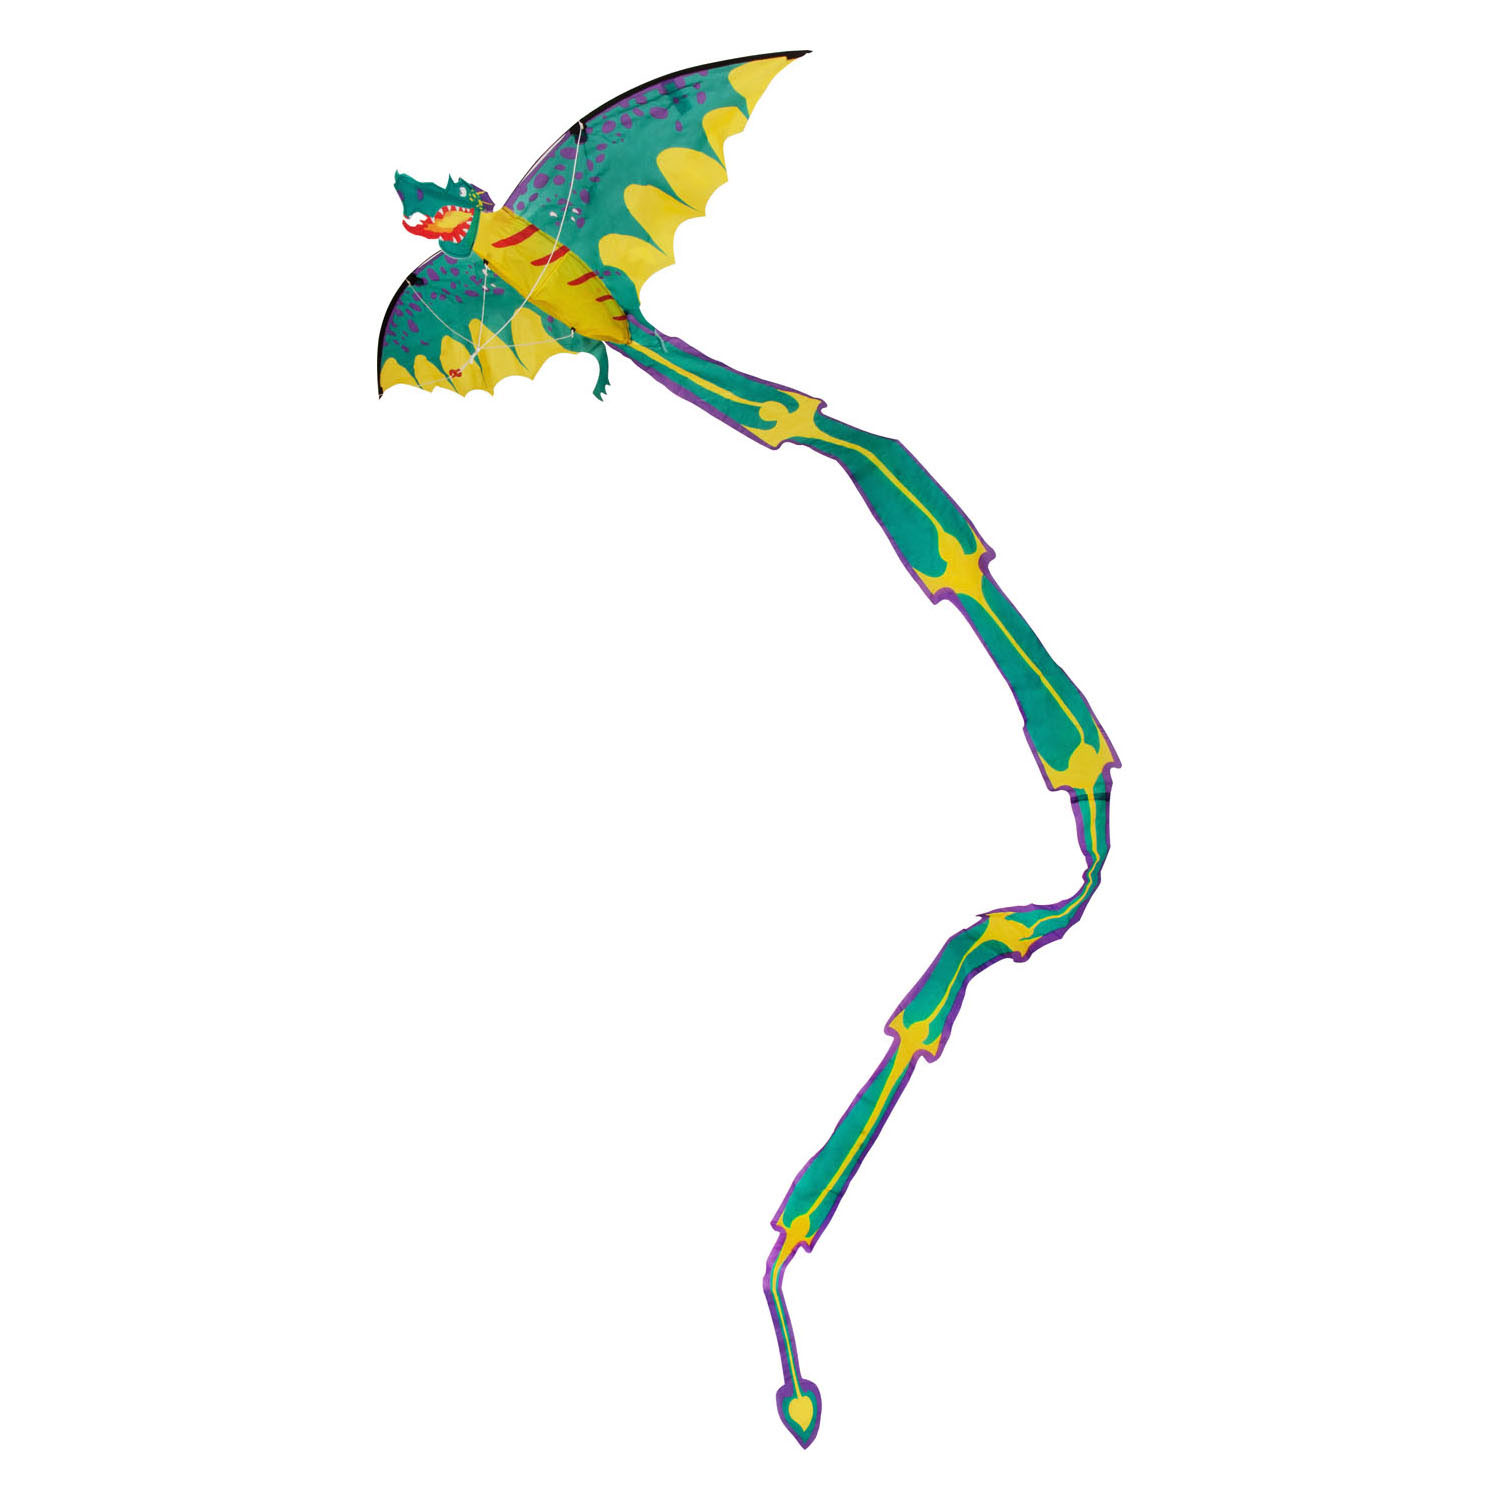 Kites Ready 2 Fly - Cerf-volant pop-up 3D Dragon